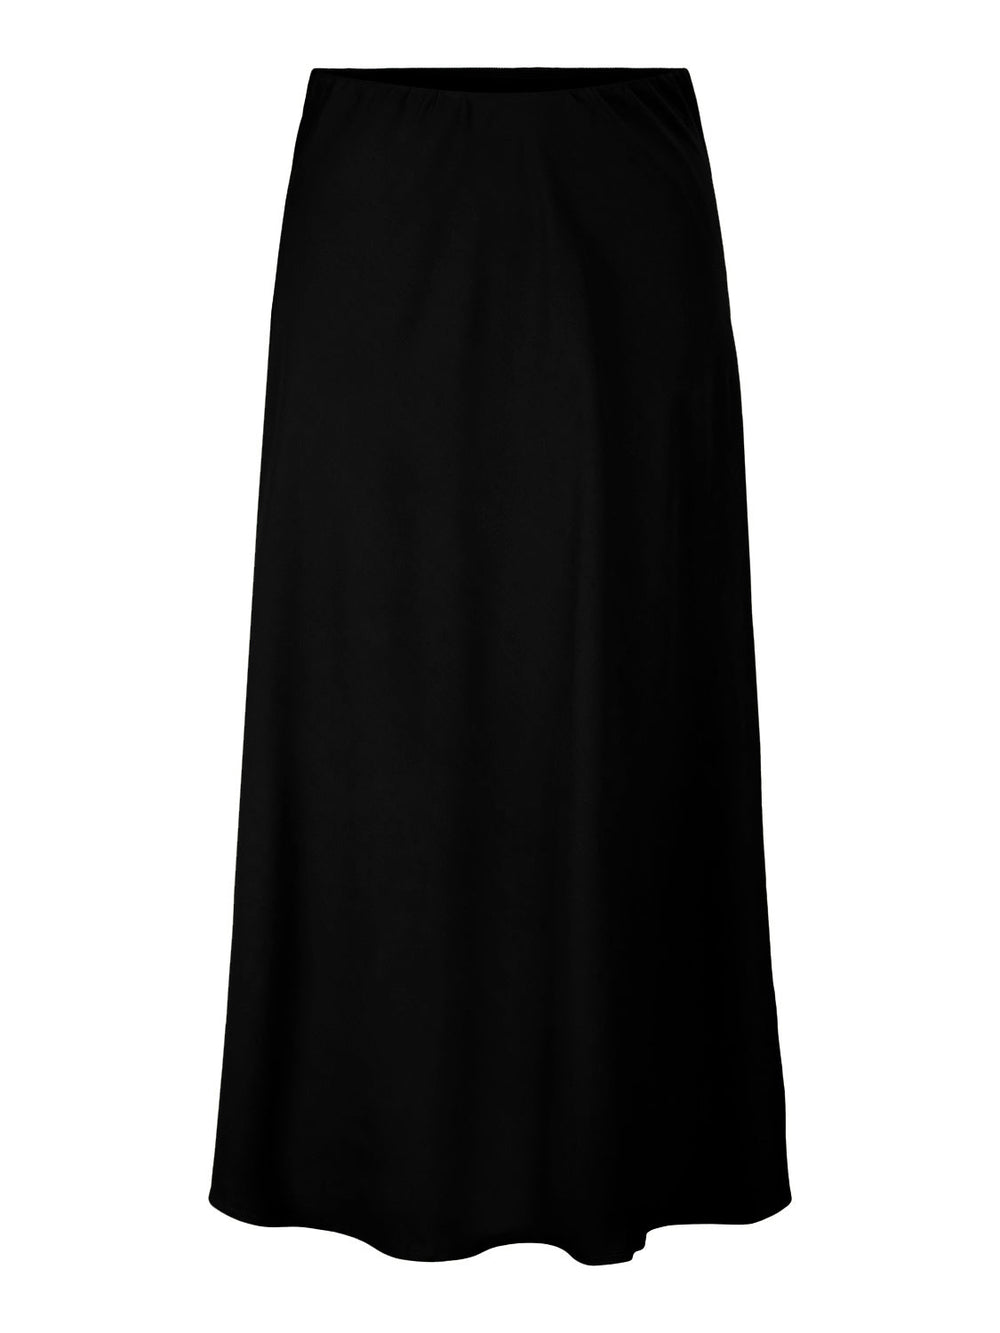 Pieces, Pcfranan Hw Midi Skirt, Black